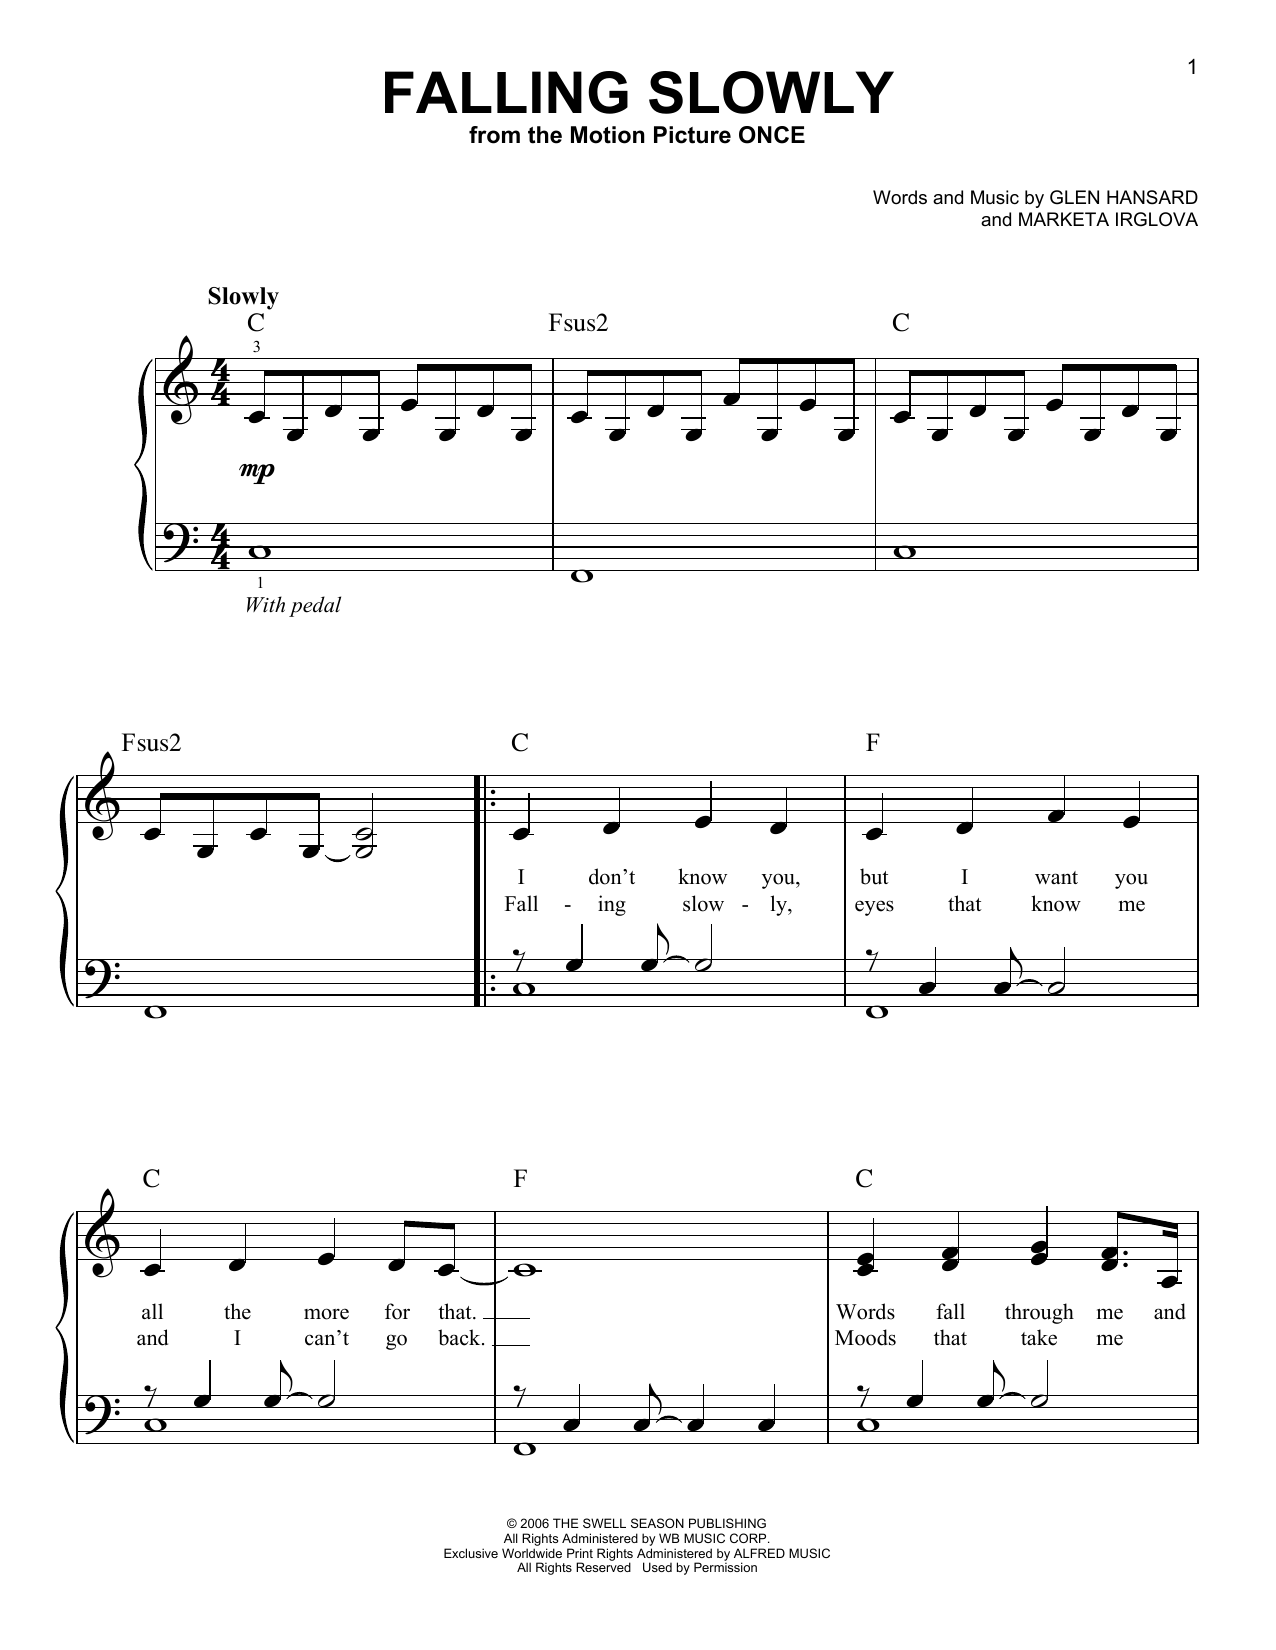 Glen Hansard & Marketa Irglova Falling Slowly (from Once) Sheet Music Notes & Chords for Ukulele - Download or Print PDF